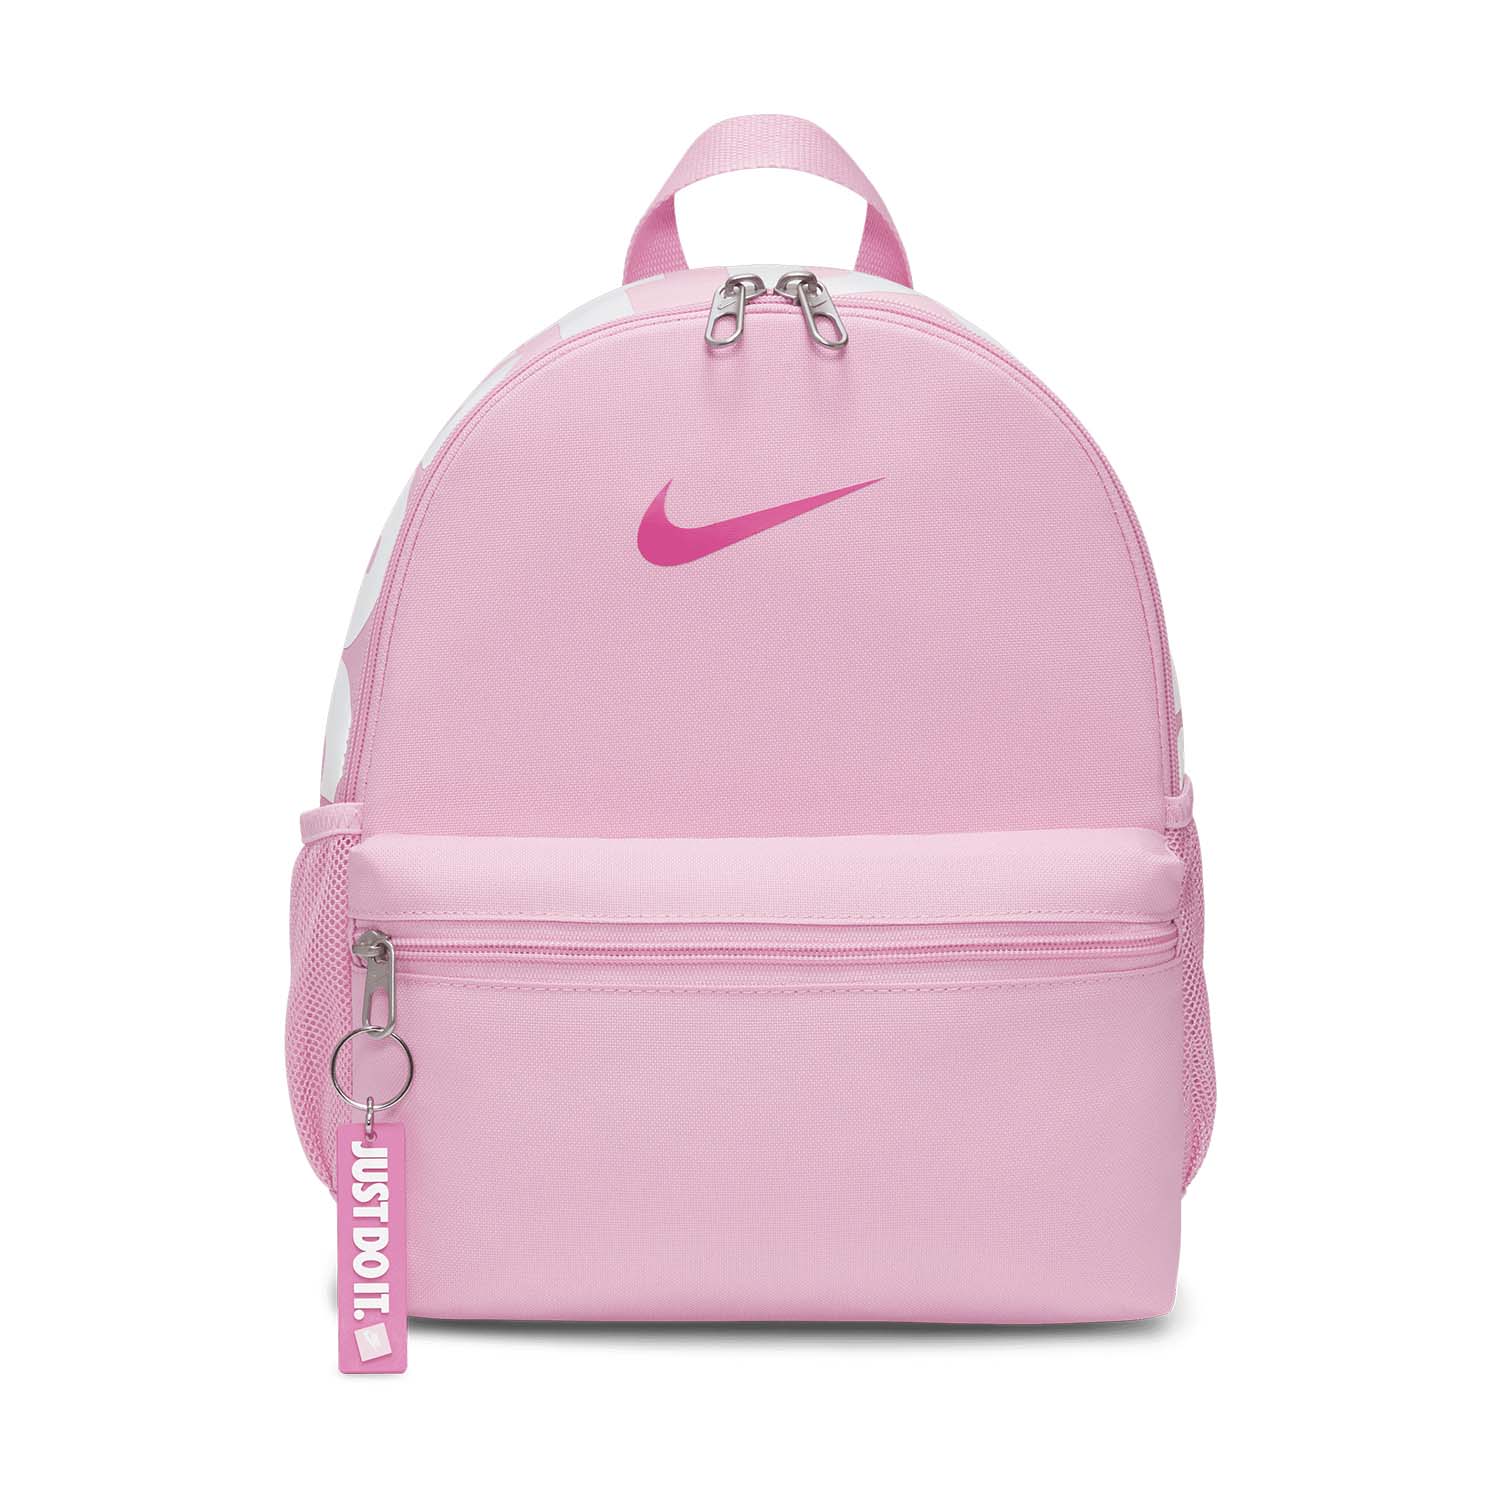 Nike Brasilia JDI Mochila Mini Niños - Pink Rise/White/Laser Fuchsia